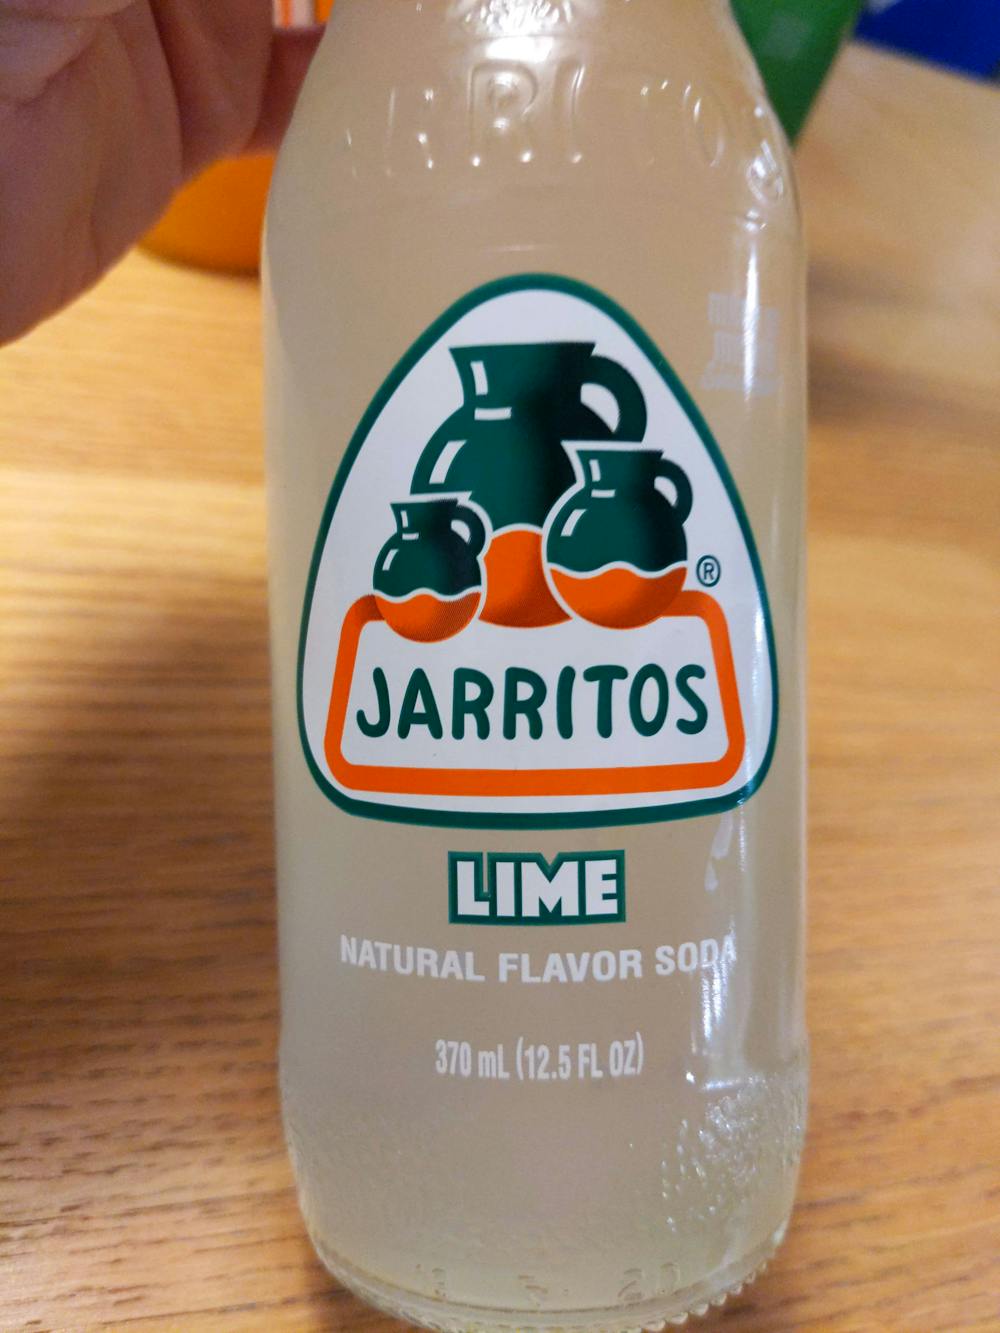 Lime, Jarritos